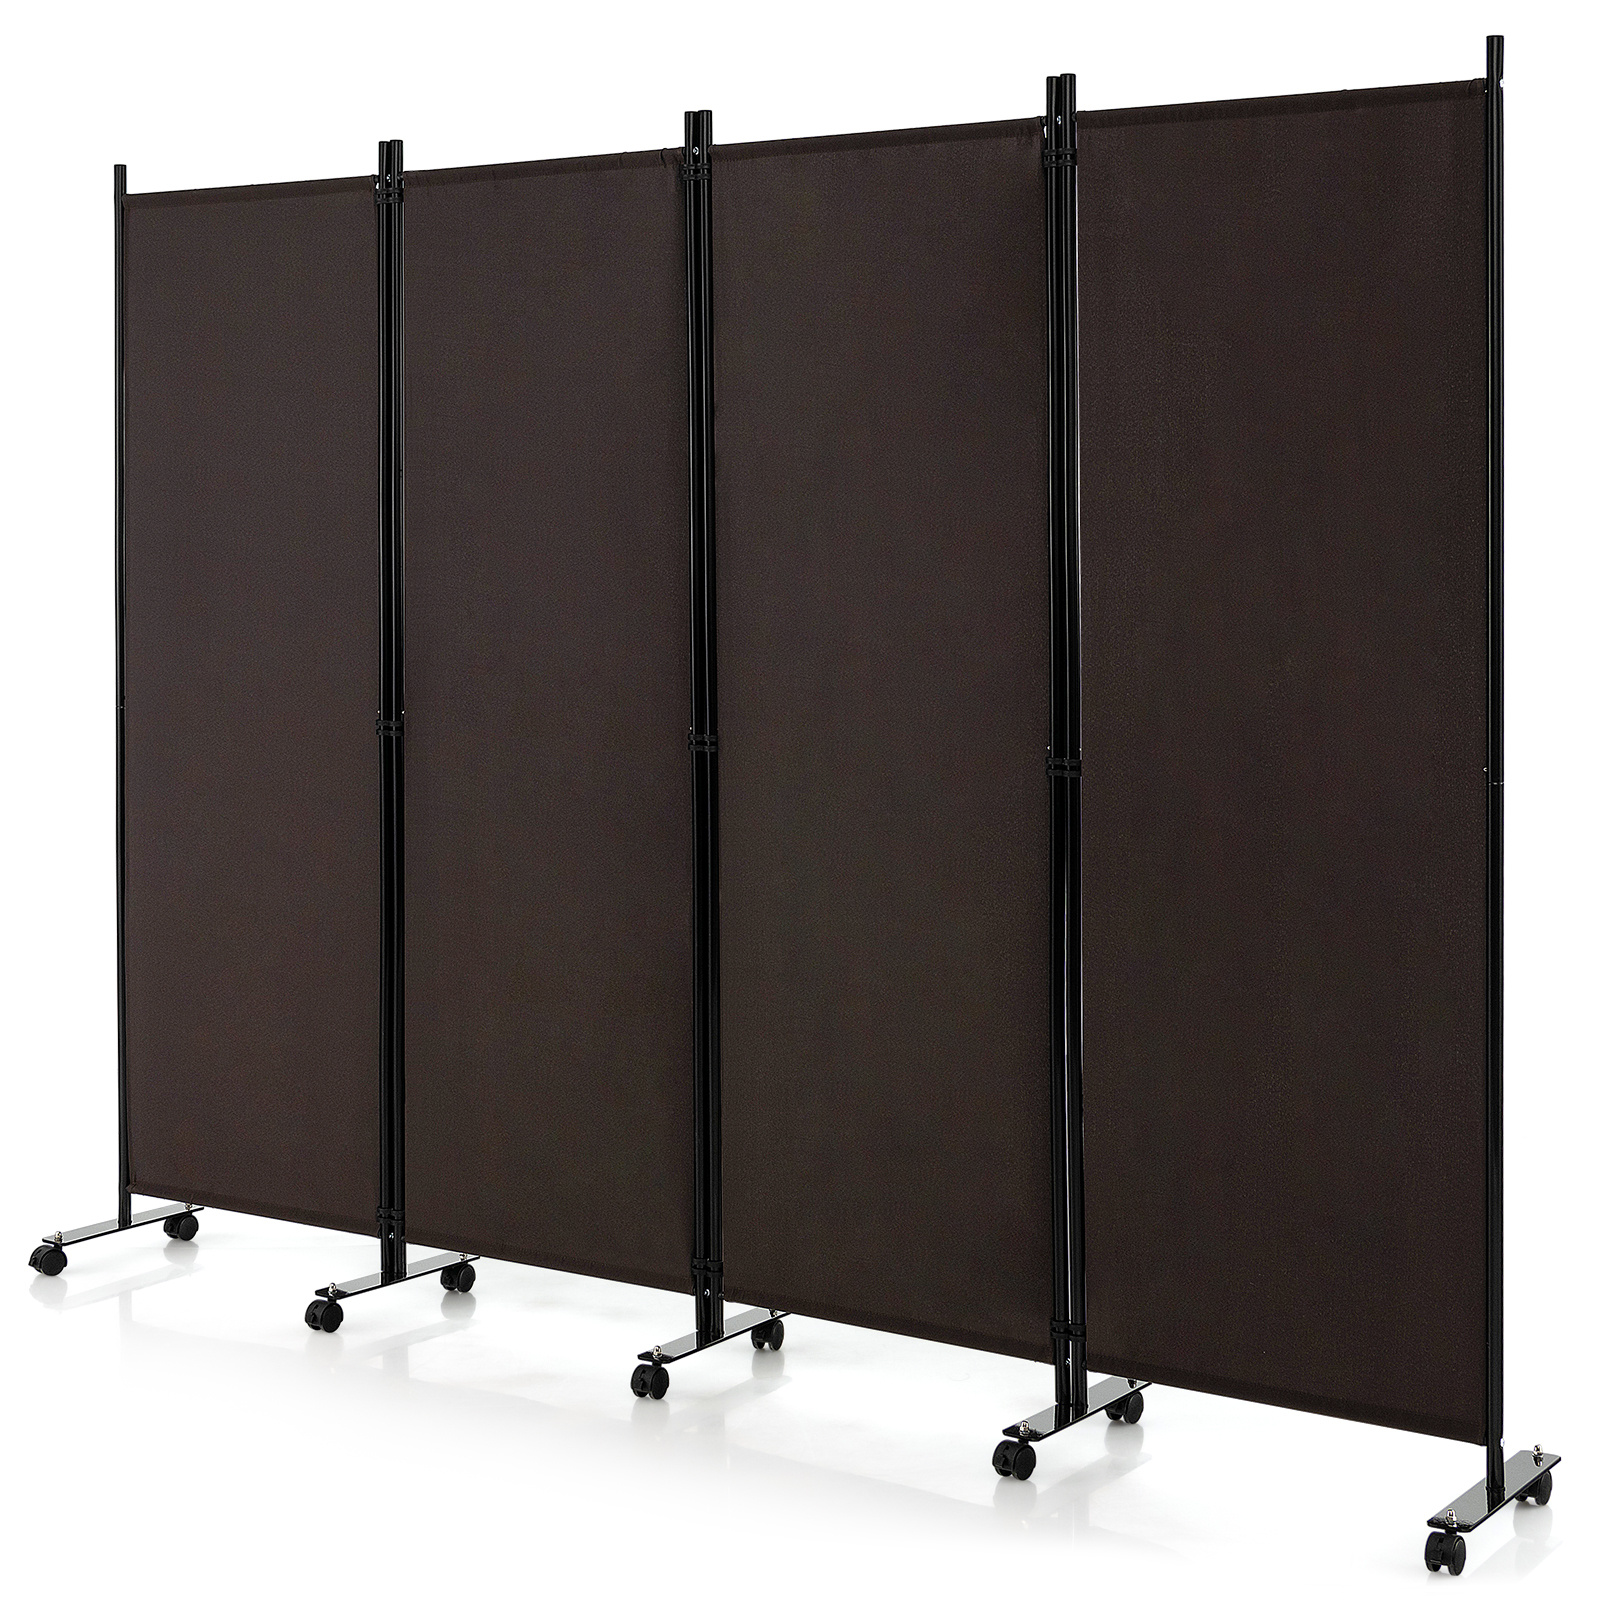 

Safstar 4-panel Folding Room Divider 6ft Rolling Privacy Screen W/ Lockable Wheels Brown